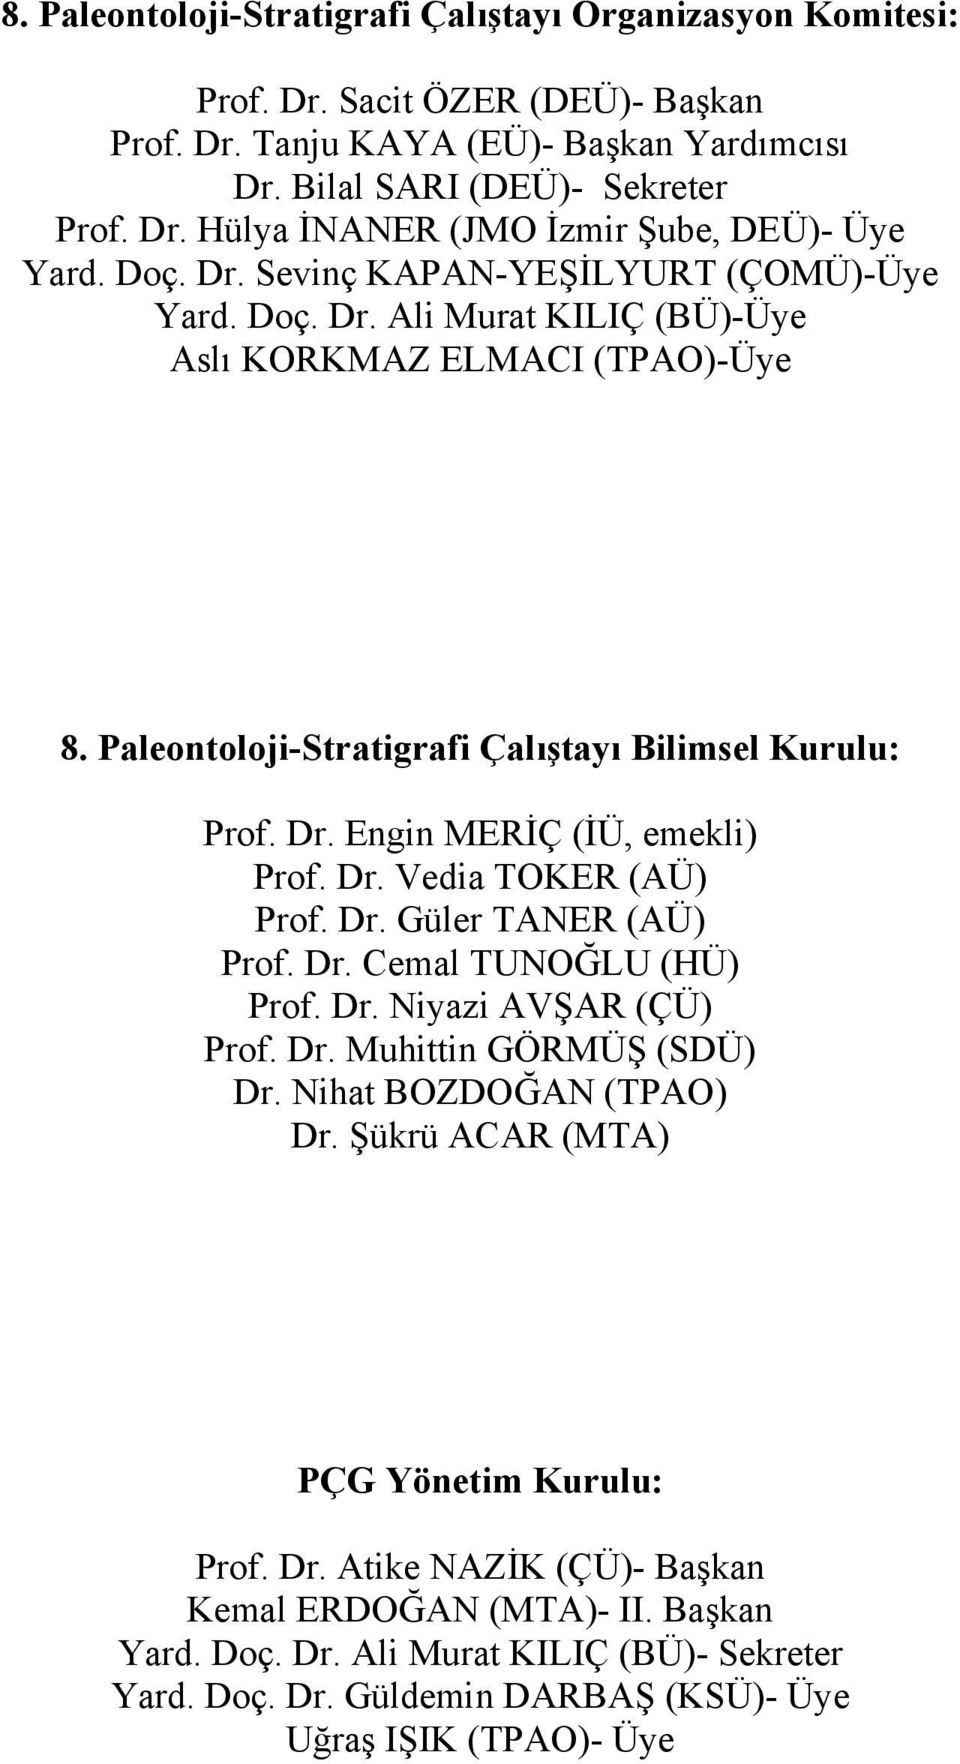 Dr. Vedia TOKER (AÜ) Prof. Dr. Güler TANER (AÜ) Prof. Dr. Cemal TUNOĞLU (HÜ) Prof. Dr. Niyazi AVŞAR (ÇÜ) Prof. Dr. Muhittin GÖRMÜŞ (SDÜ) Dr. Nihat BOZDOĞAN (TPAO) Dr.